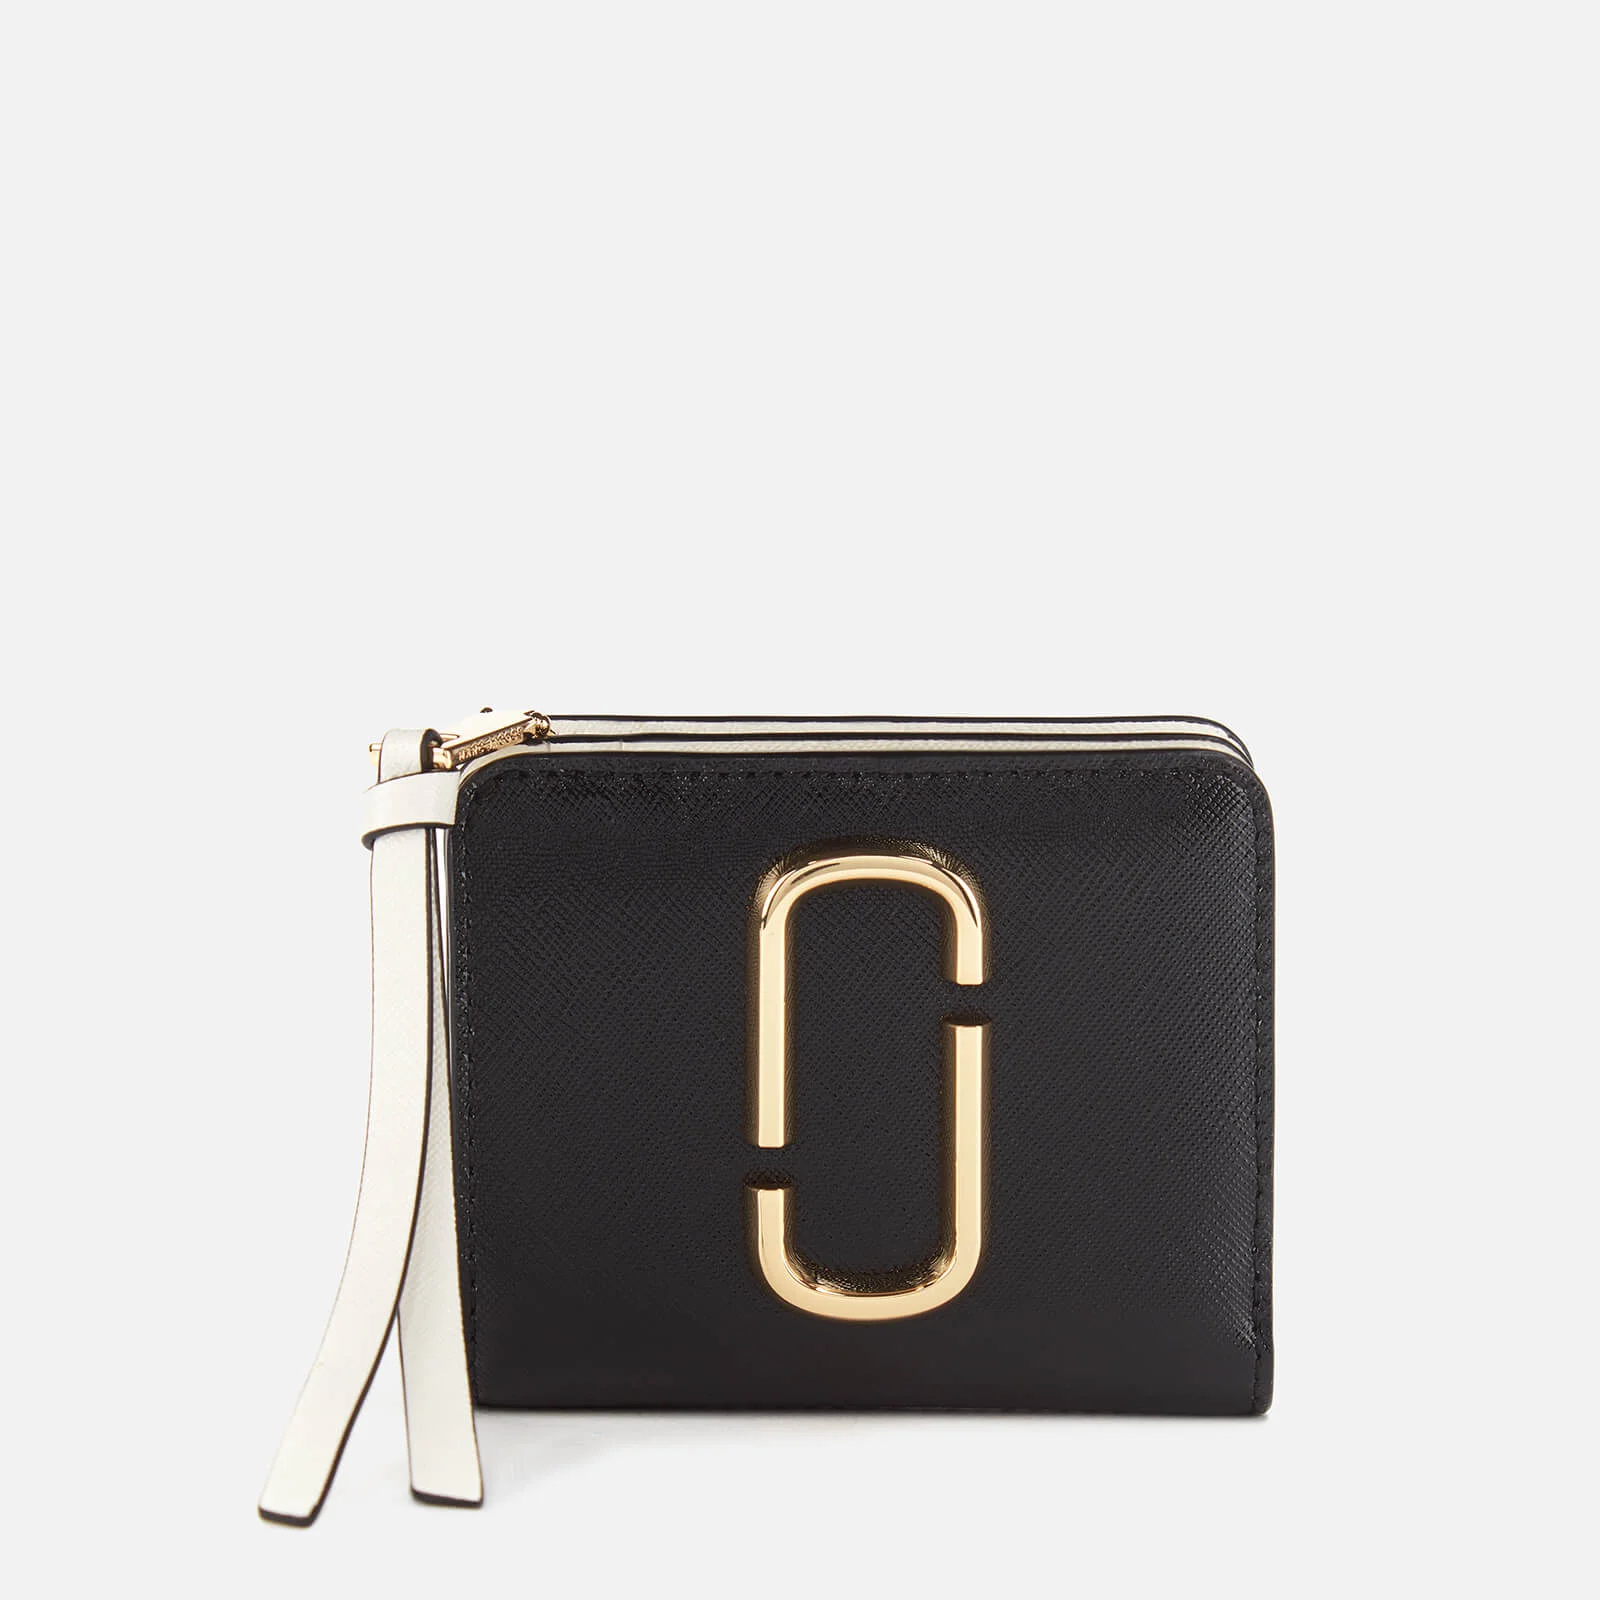 Marc Jacobs Women's Mini Compact Wallet - Black Multi Image 1